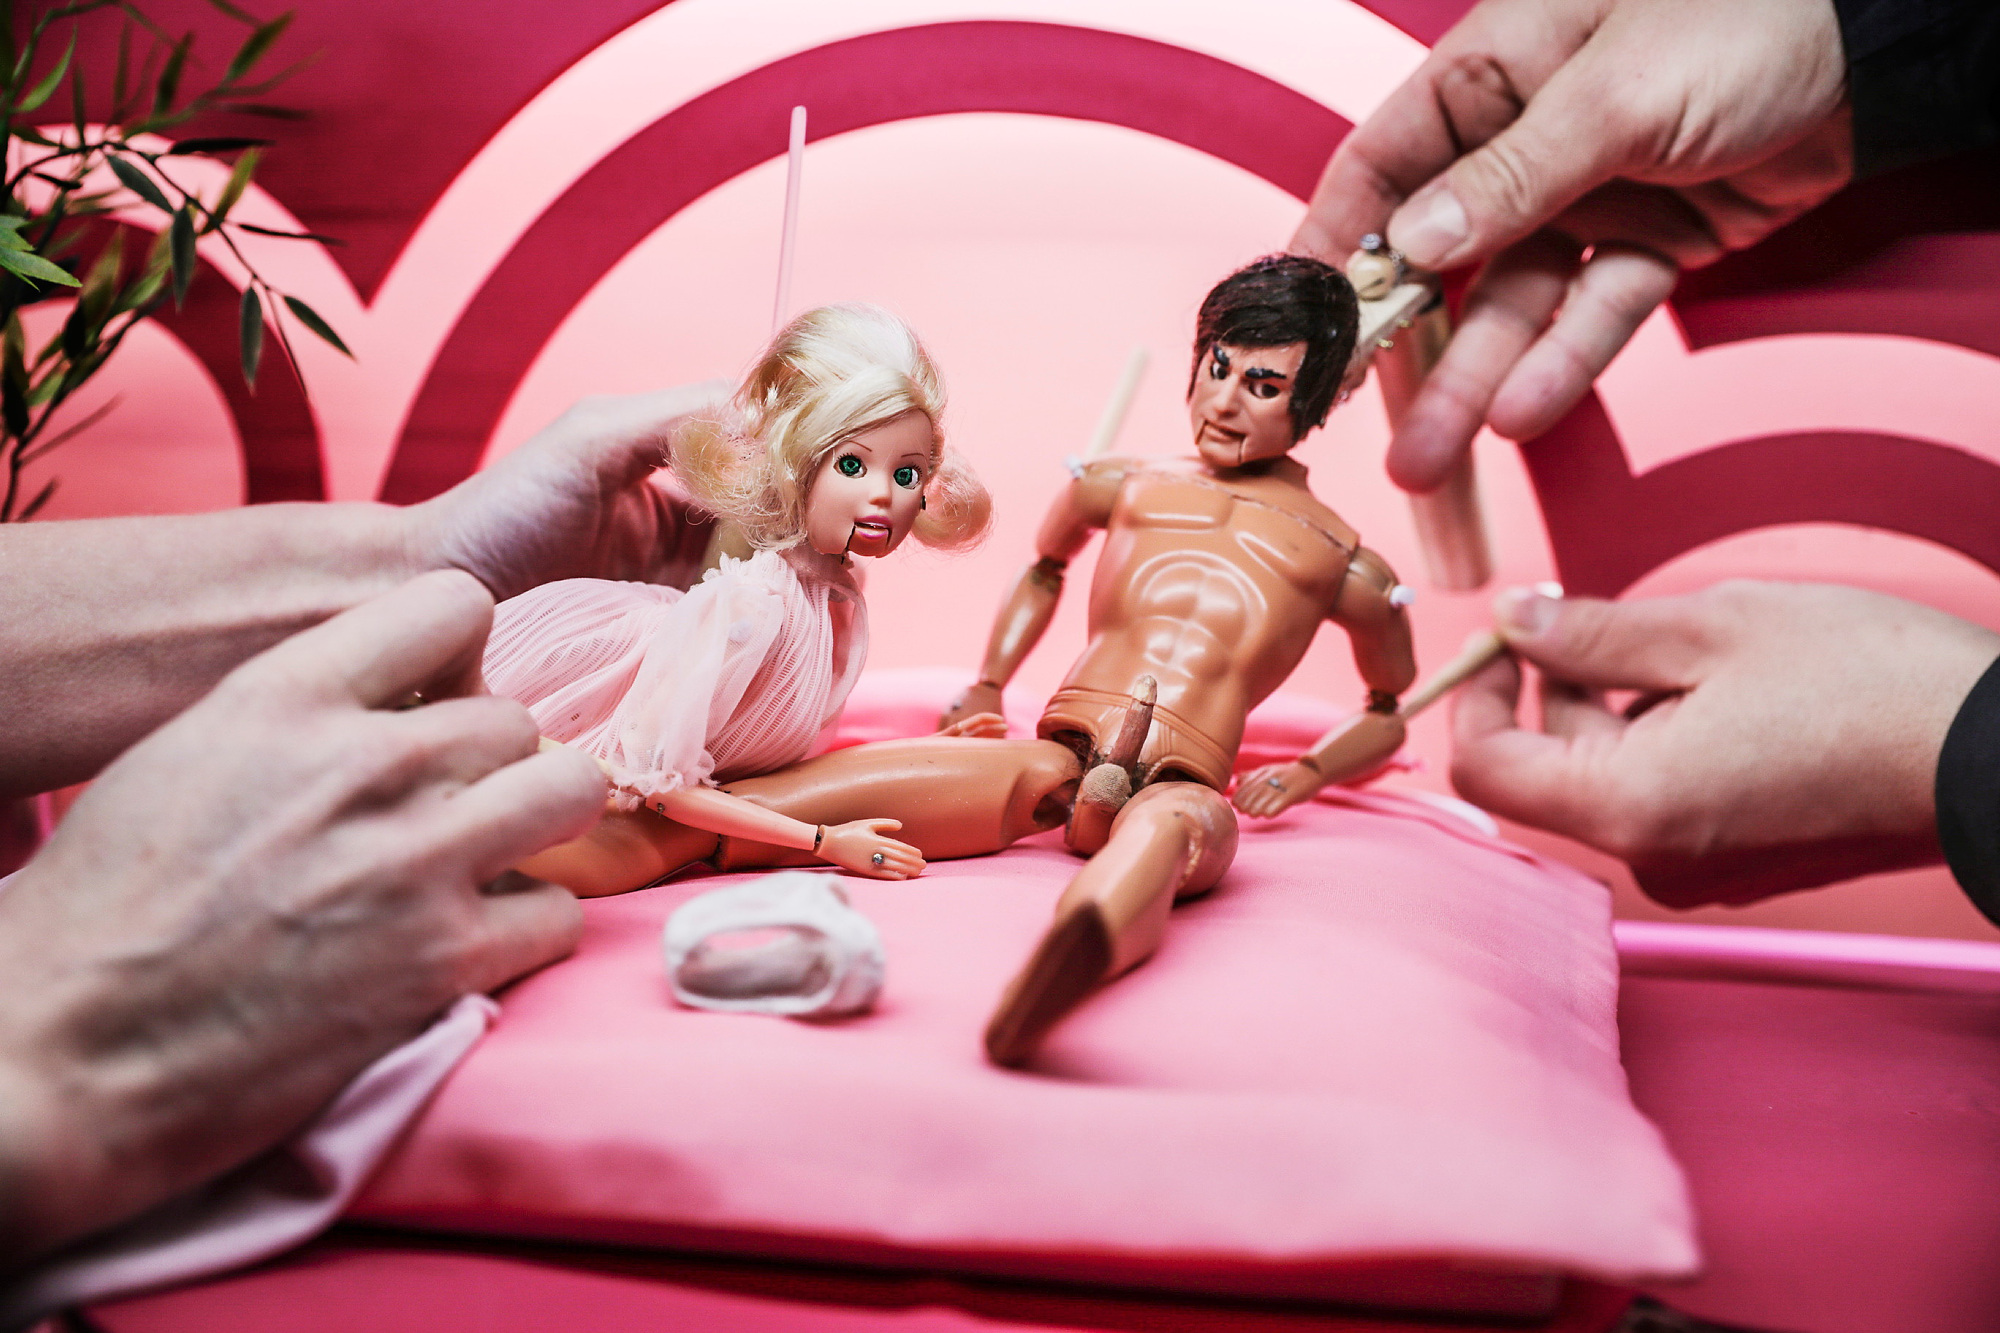 Barbiedockor på en säng